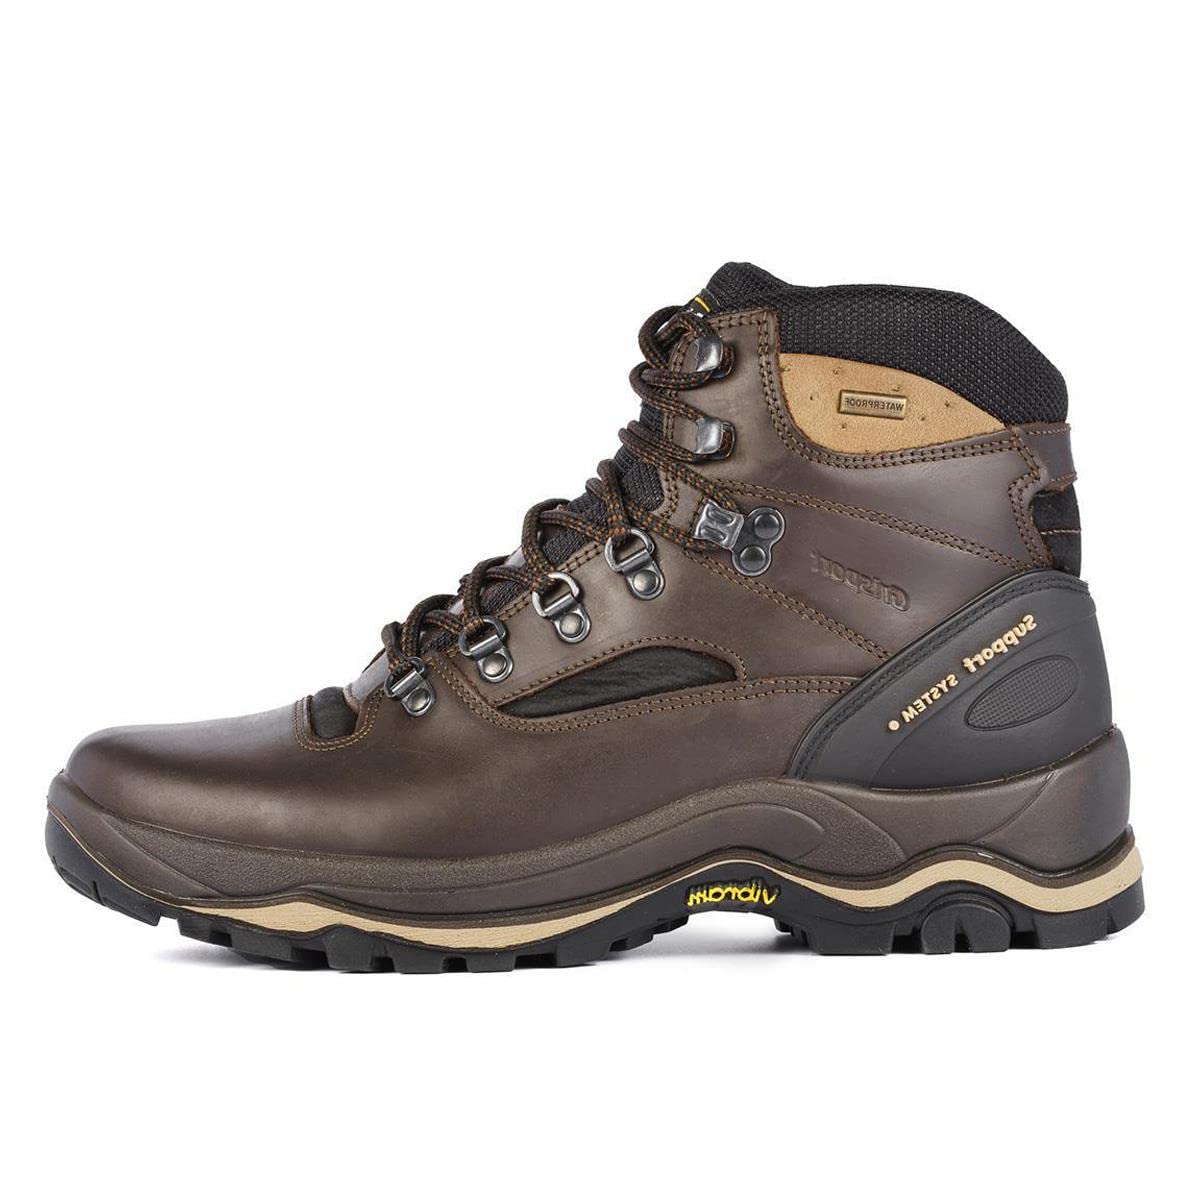 Grisport Men's Quatro Hiking Boot Brown CMG614, 46 EU